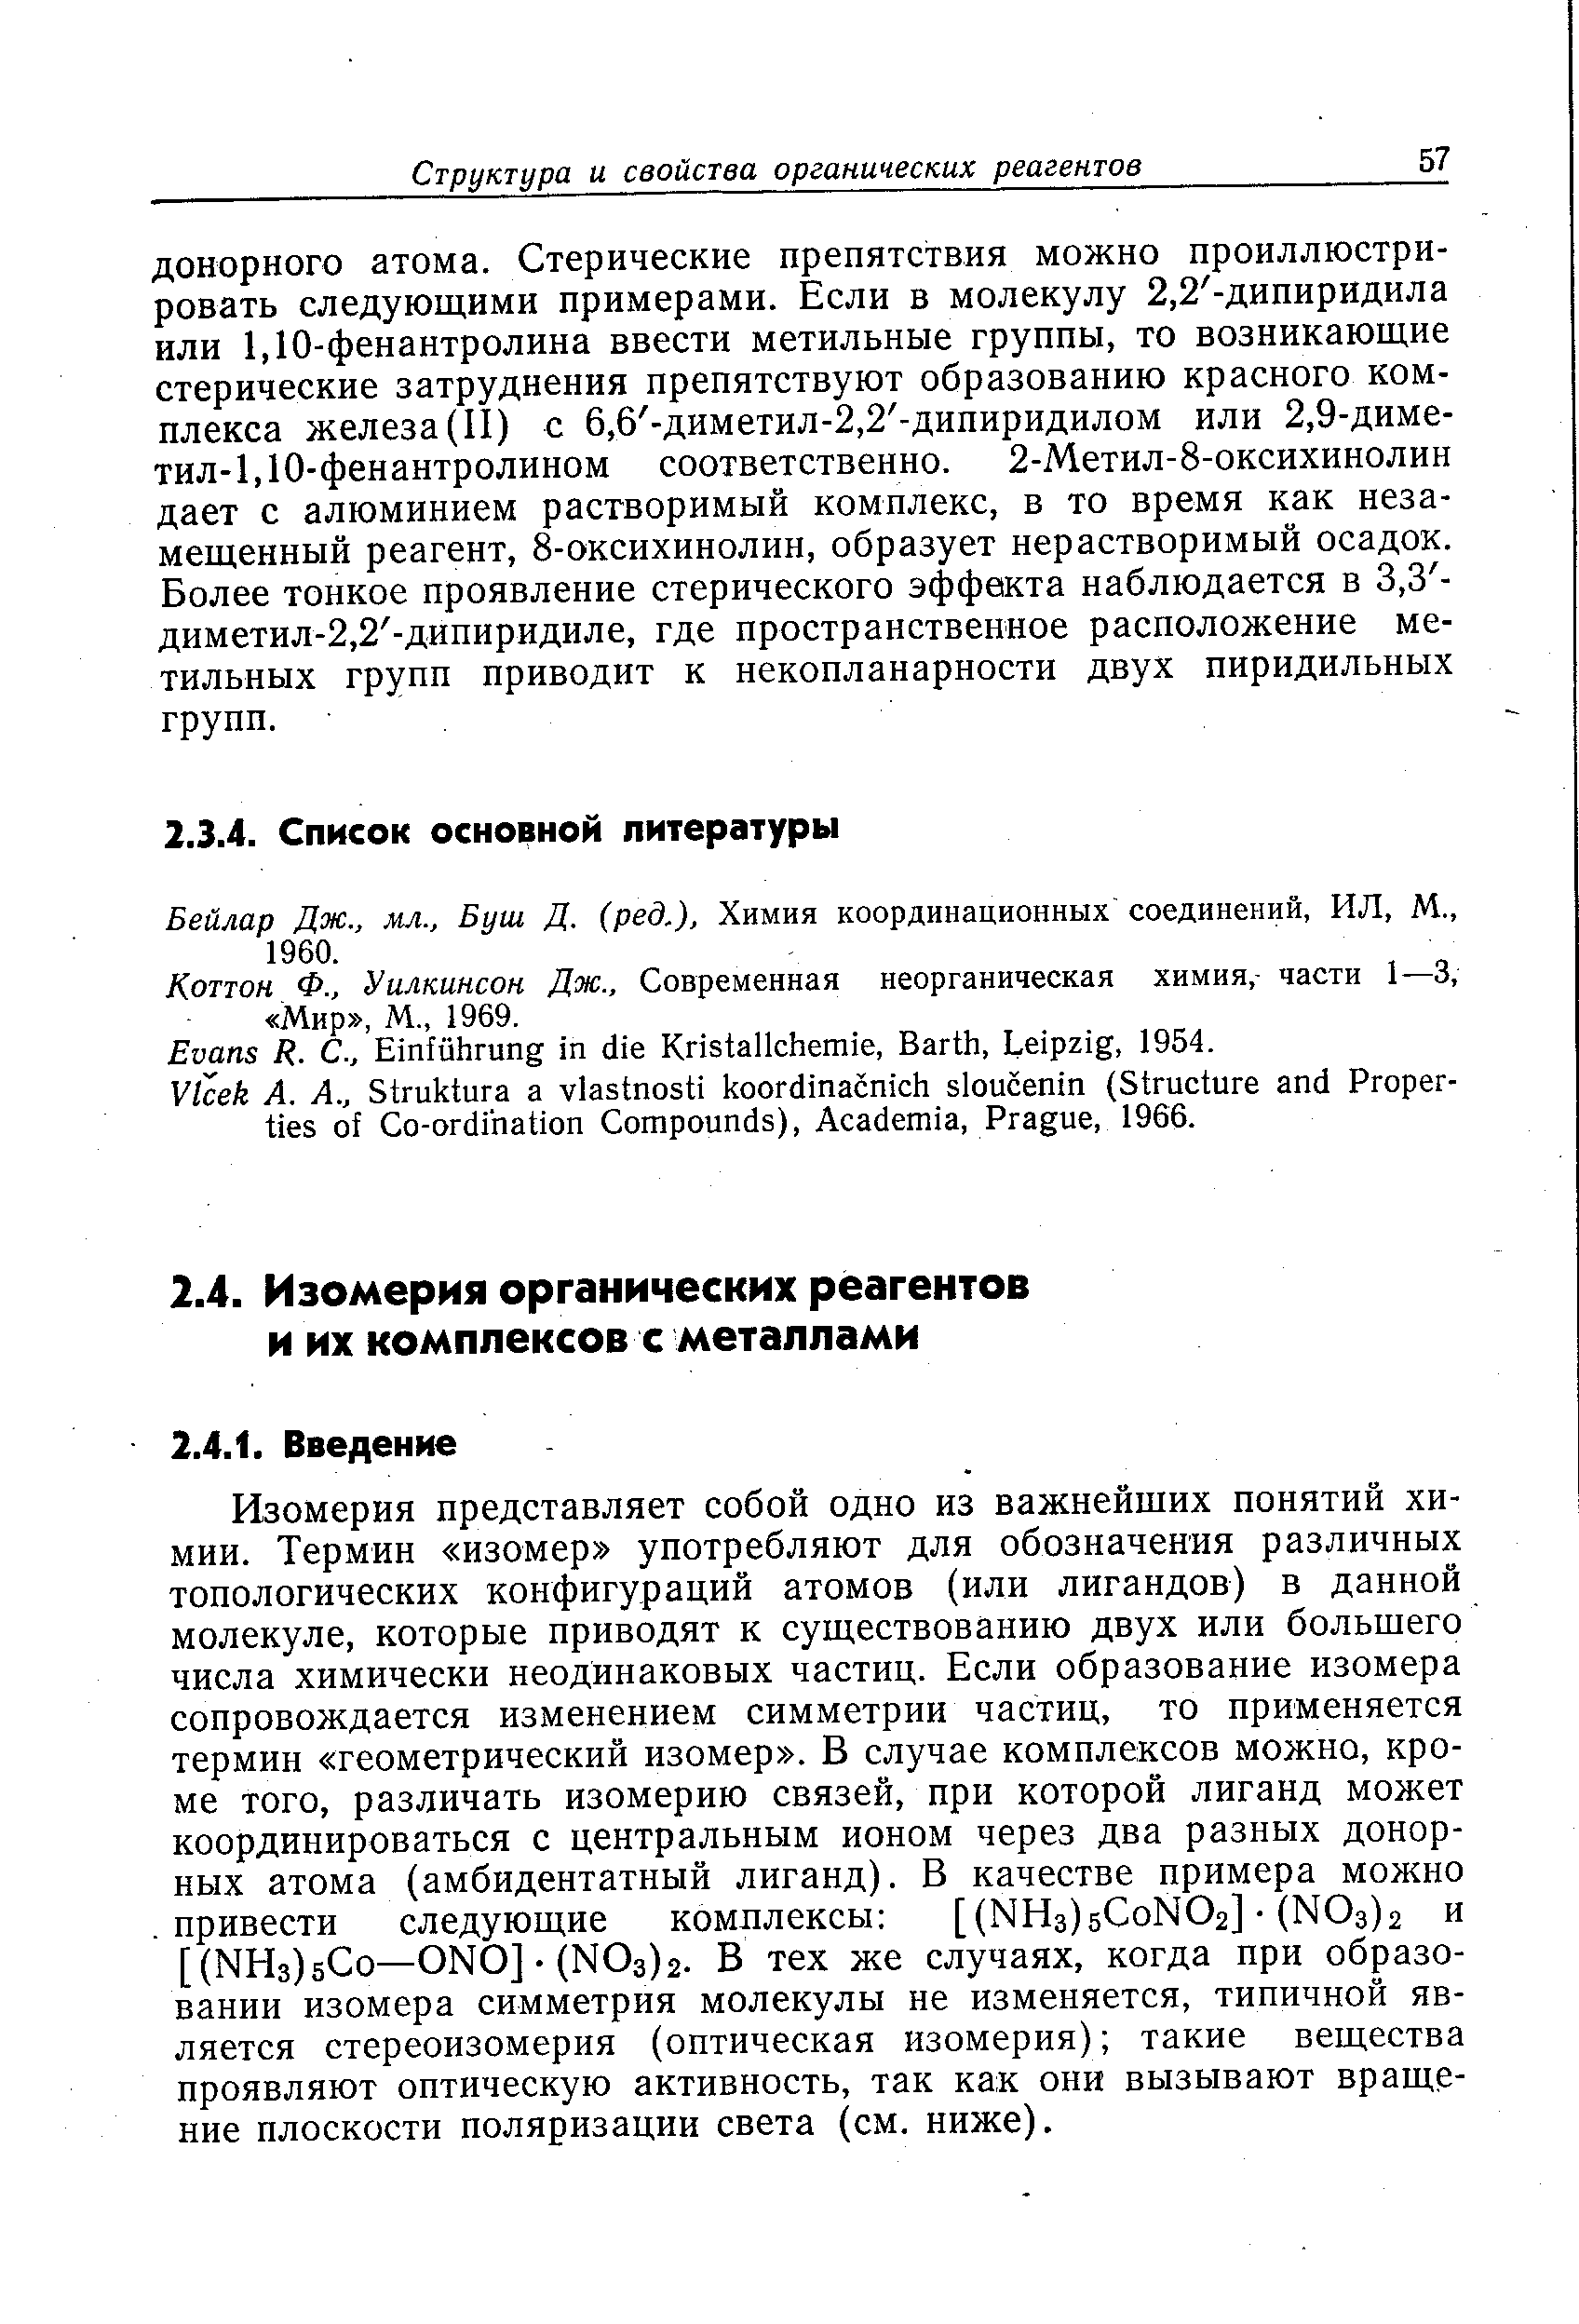 Бейлар Дж., мл., Буш Д. (ред.). Химия координационных соединений, ИЛ, М., 1960.